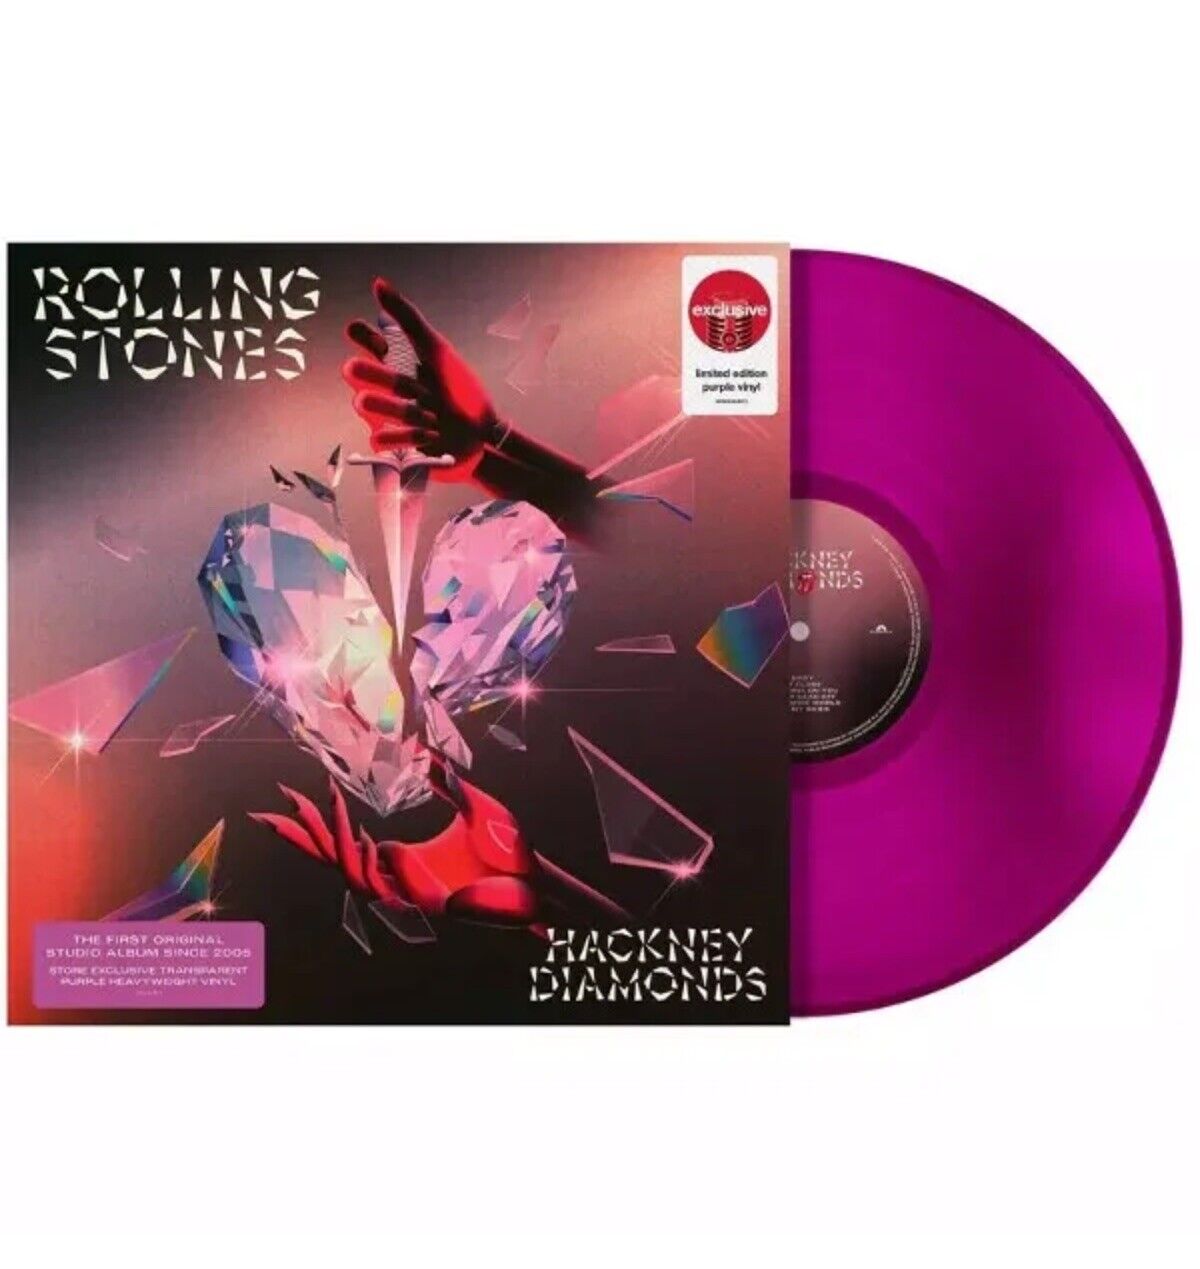 Rolling Stones Hackney Diamonds Purple Vinyl Album-Sealed